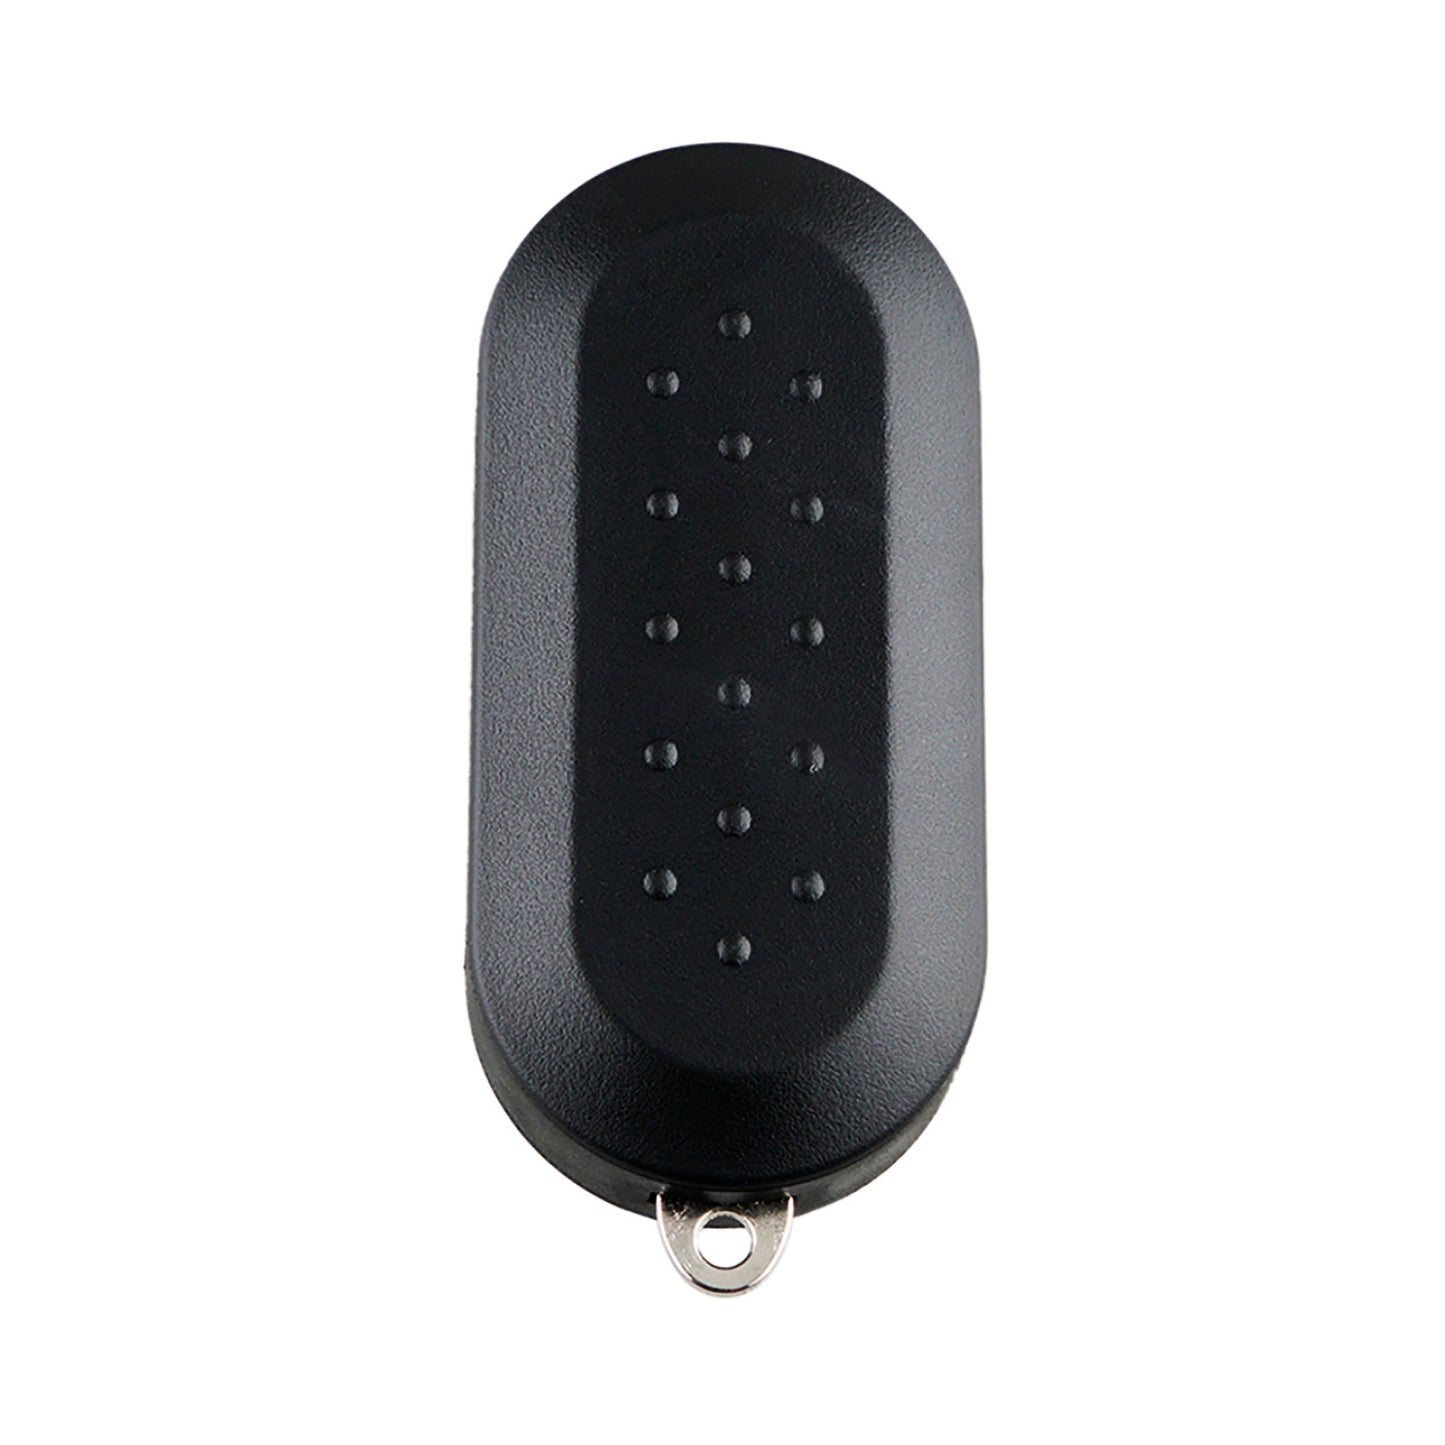 3 Buttons 433MHz Keyless Entry Fob Remote Car Key For 2014 - 2017 Fiat 500L (Marelli BCM) Dodge Ram Promaster (Marelli BCM) FCC ID:2ADPXTRF198 SKU : J652